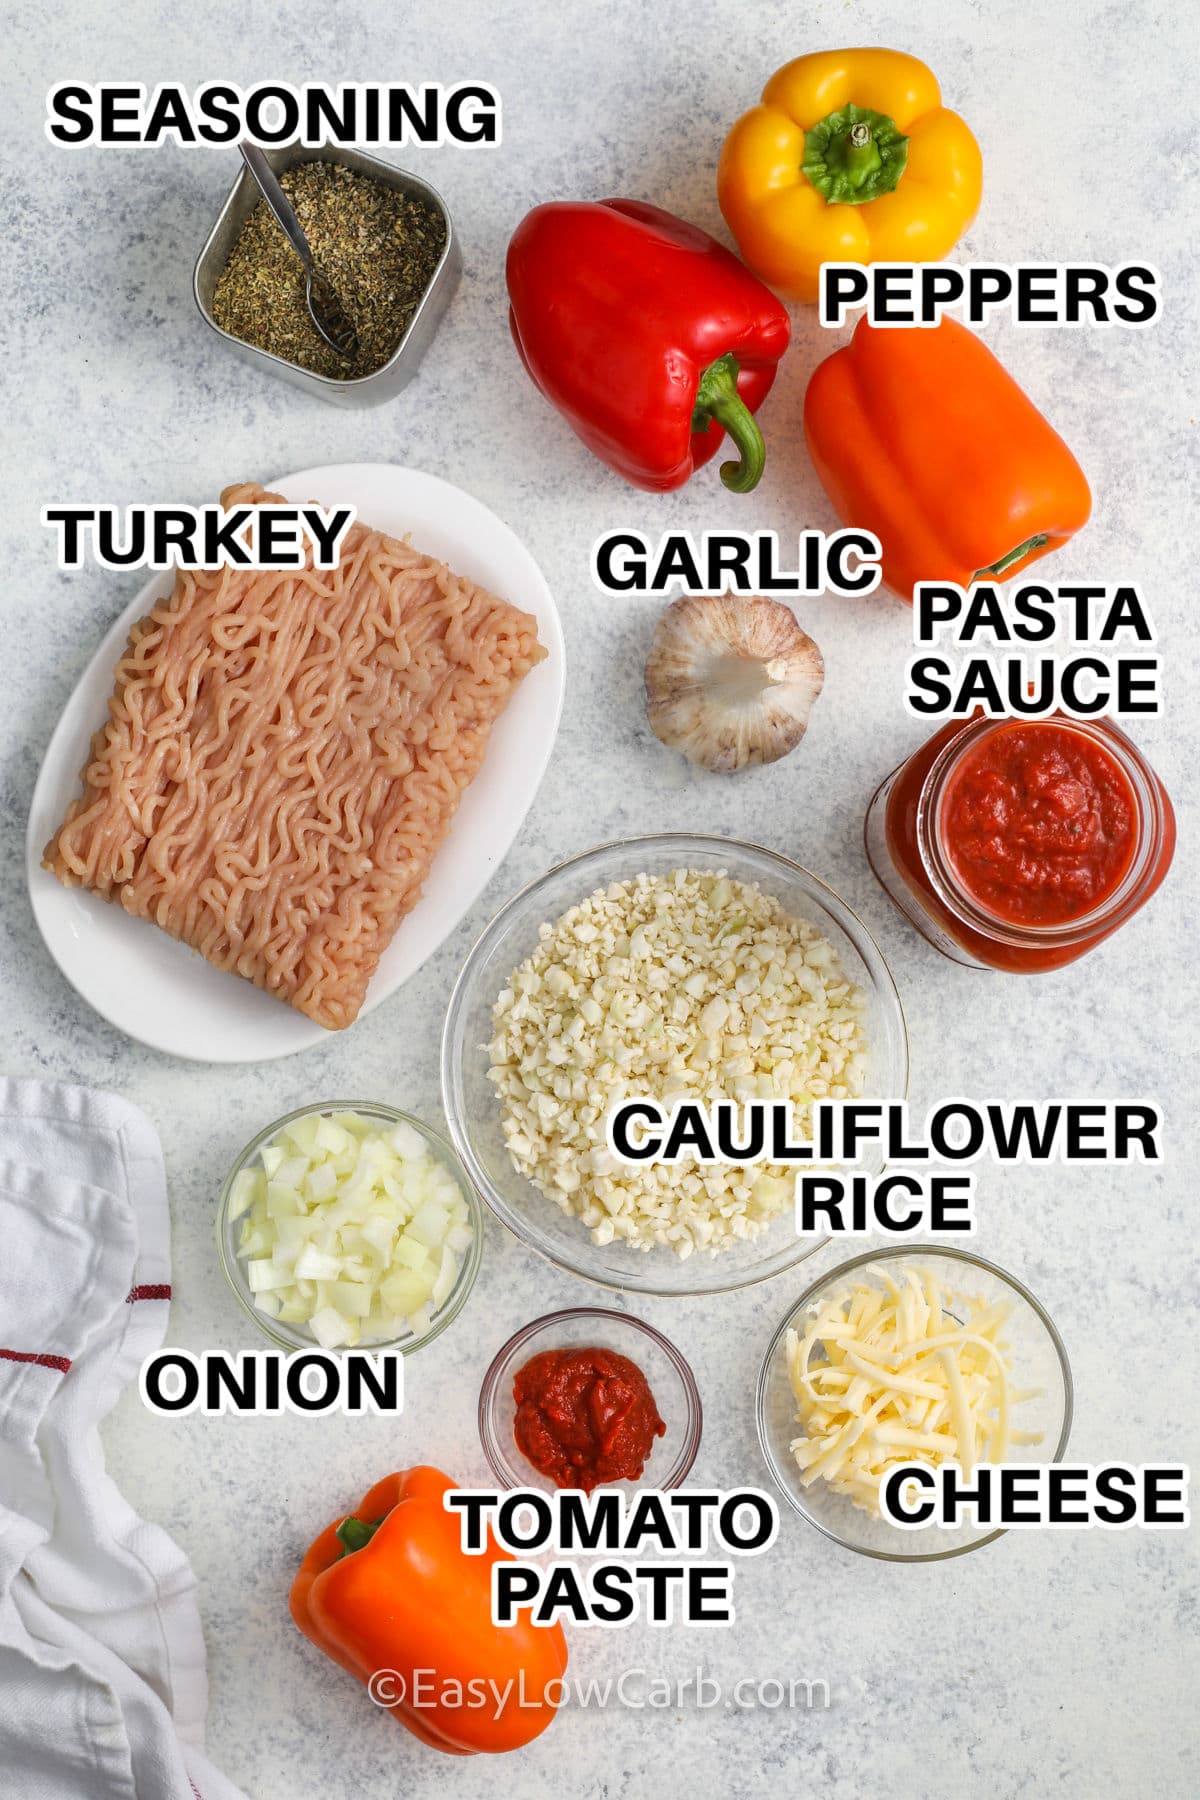 seasoning , turkey , garlic , peppers , pasta sauce , cauliflower rice , cheese , onion , tomato paste with labels to make Ground Turkey Stuffed Peppers